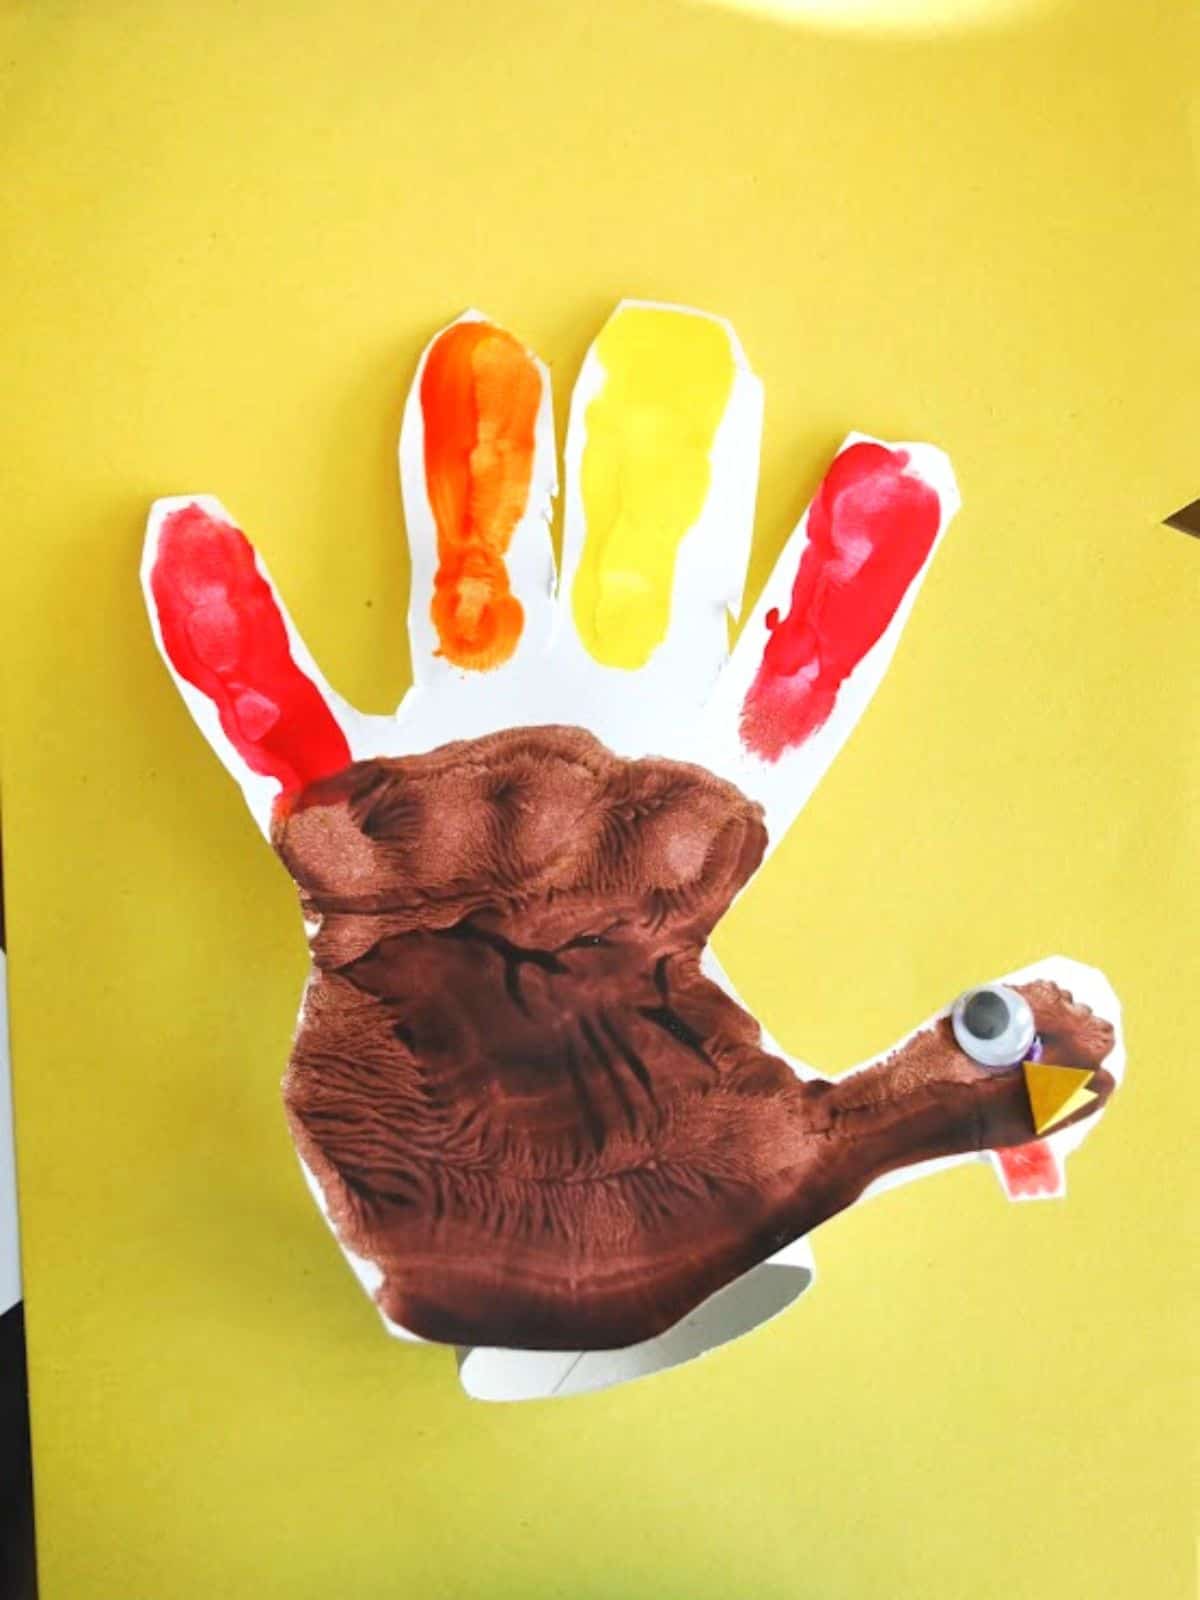 turkey handprint place card on yellow background.